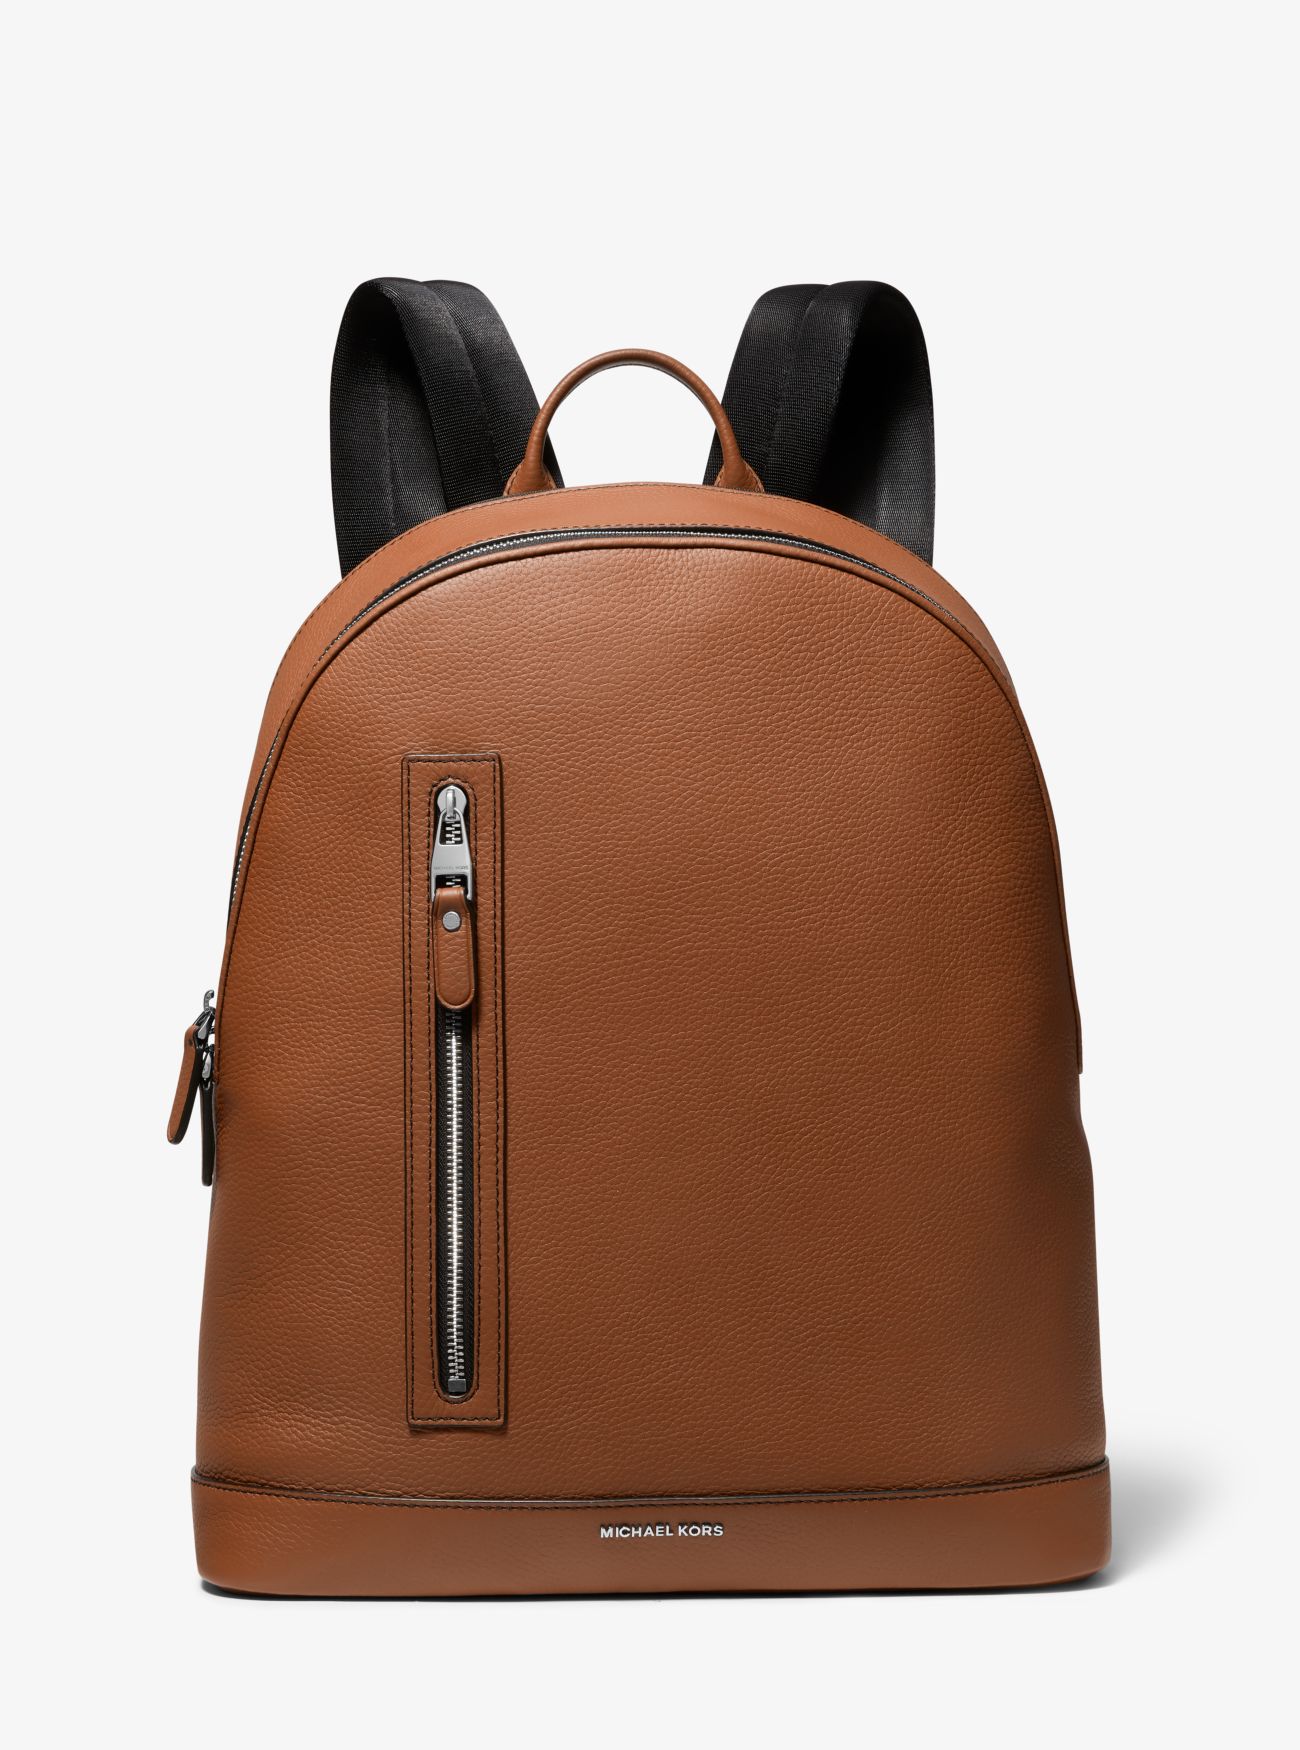 MK Hudson Slim Pebbled Leather Backpack - Brown - Michael Kors